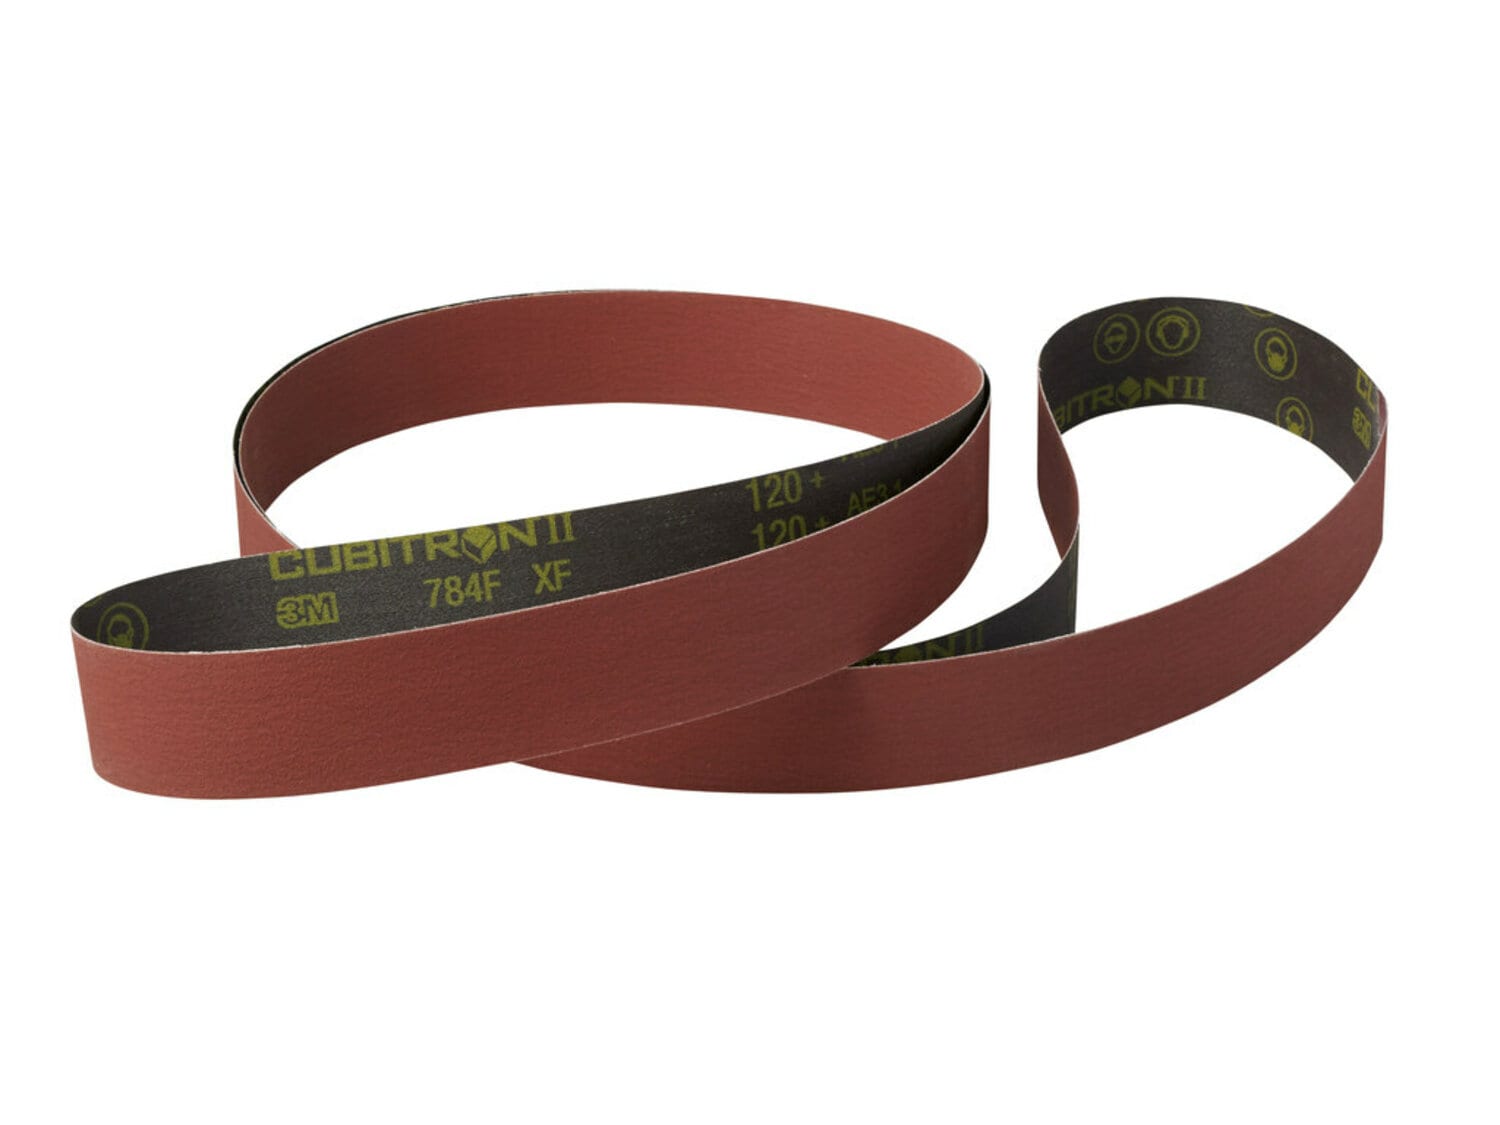 7100213795 - 3M Cubitron ll Cloth Belt 784F, 36+ YF-weight, 64 in x 103 in,
Film-lok, L-flex